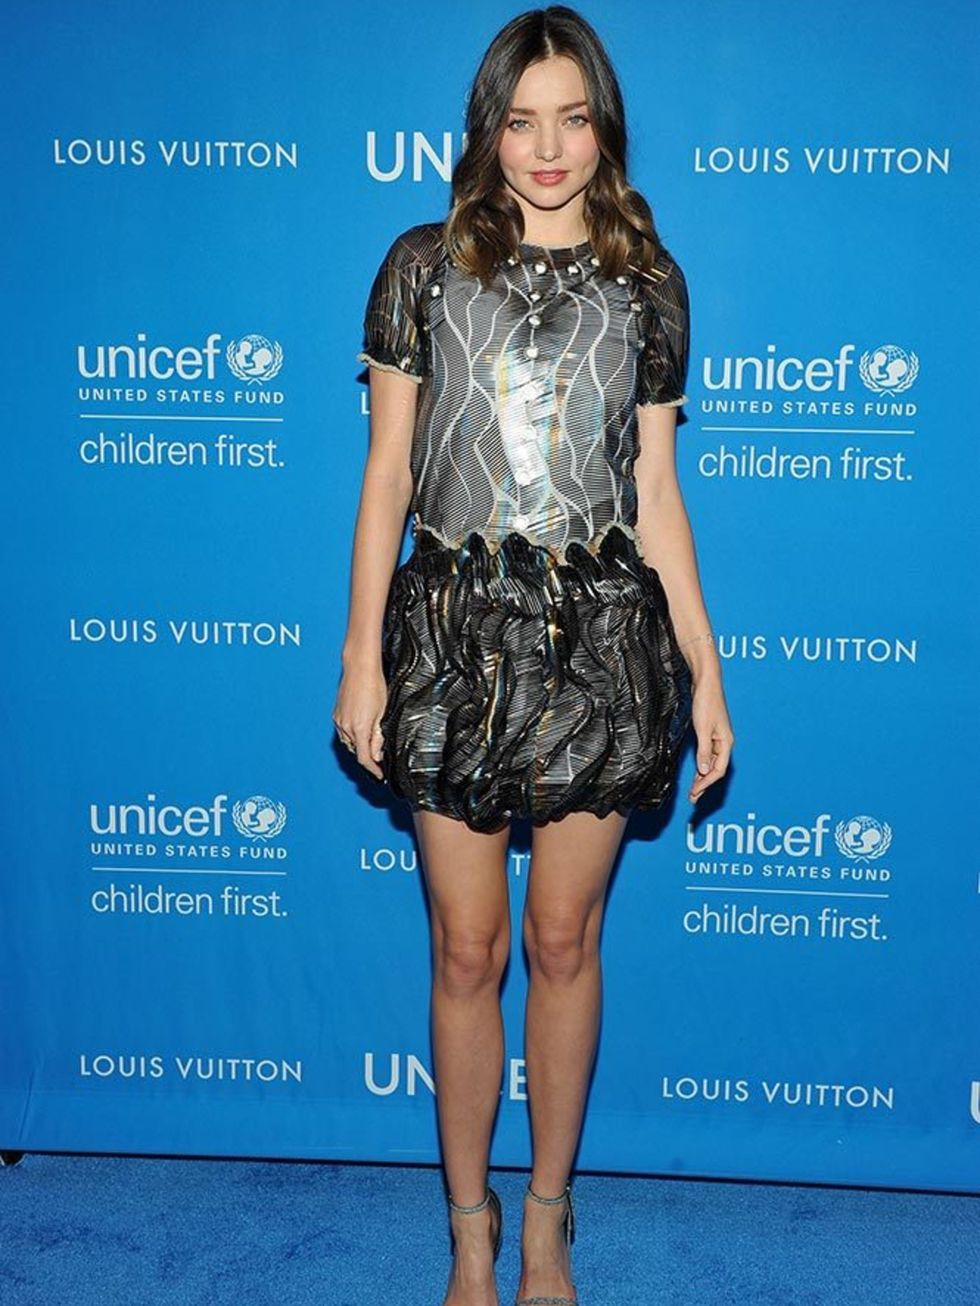 The UNICEF x Louis Vuitton Ball Honouring David Beckham